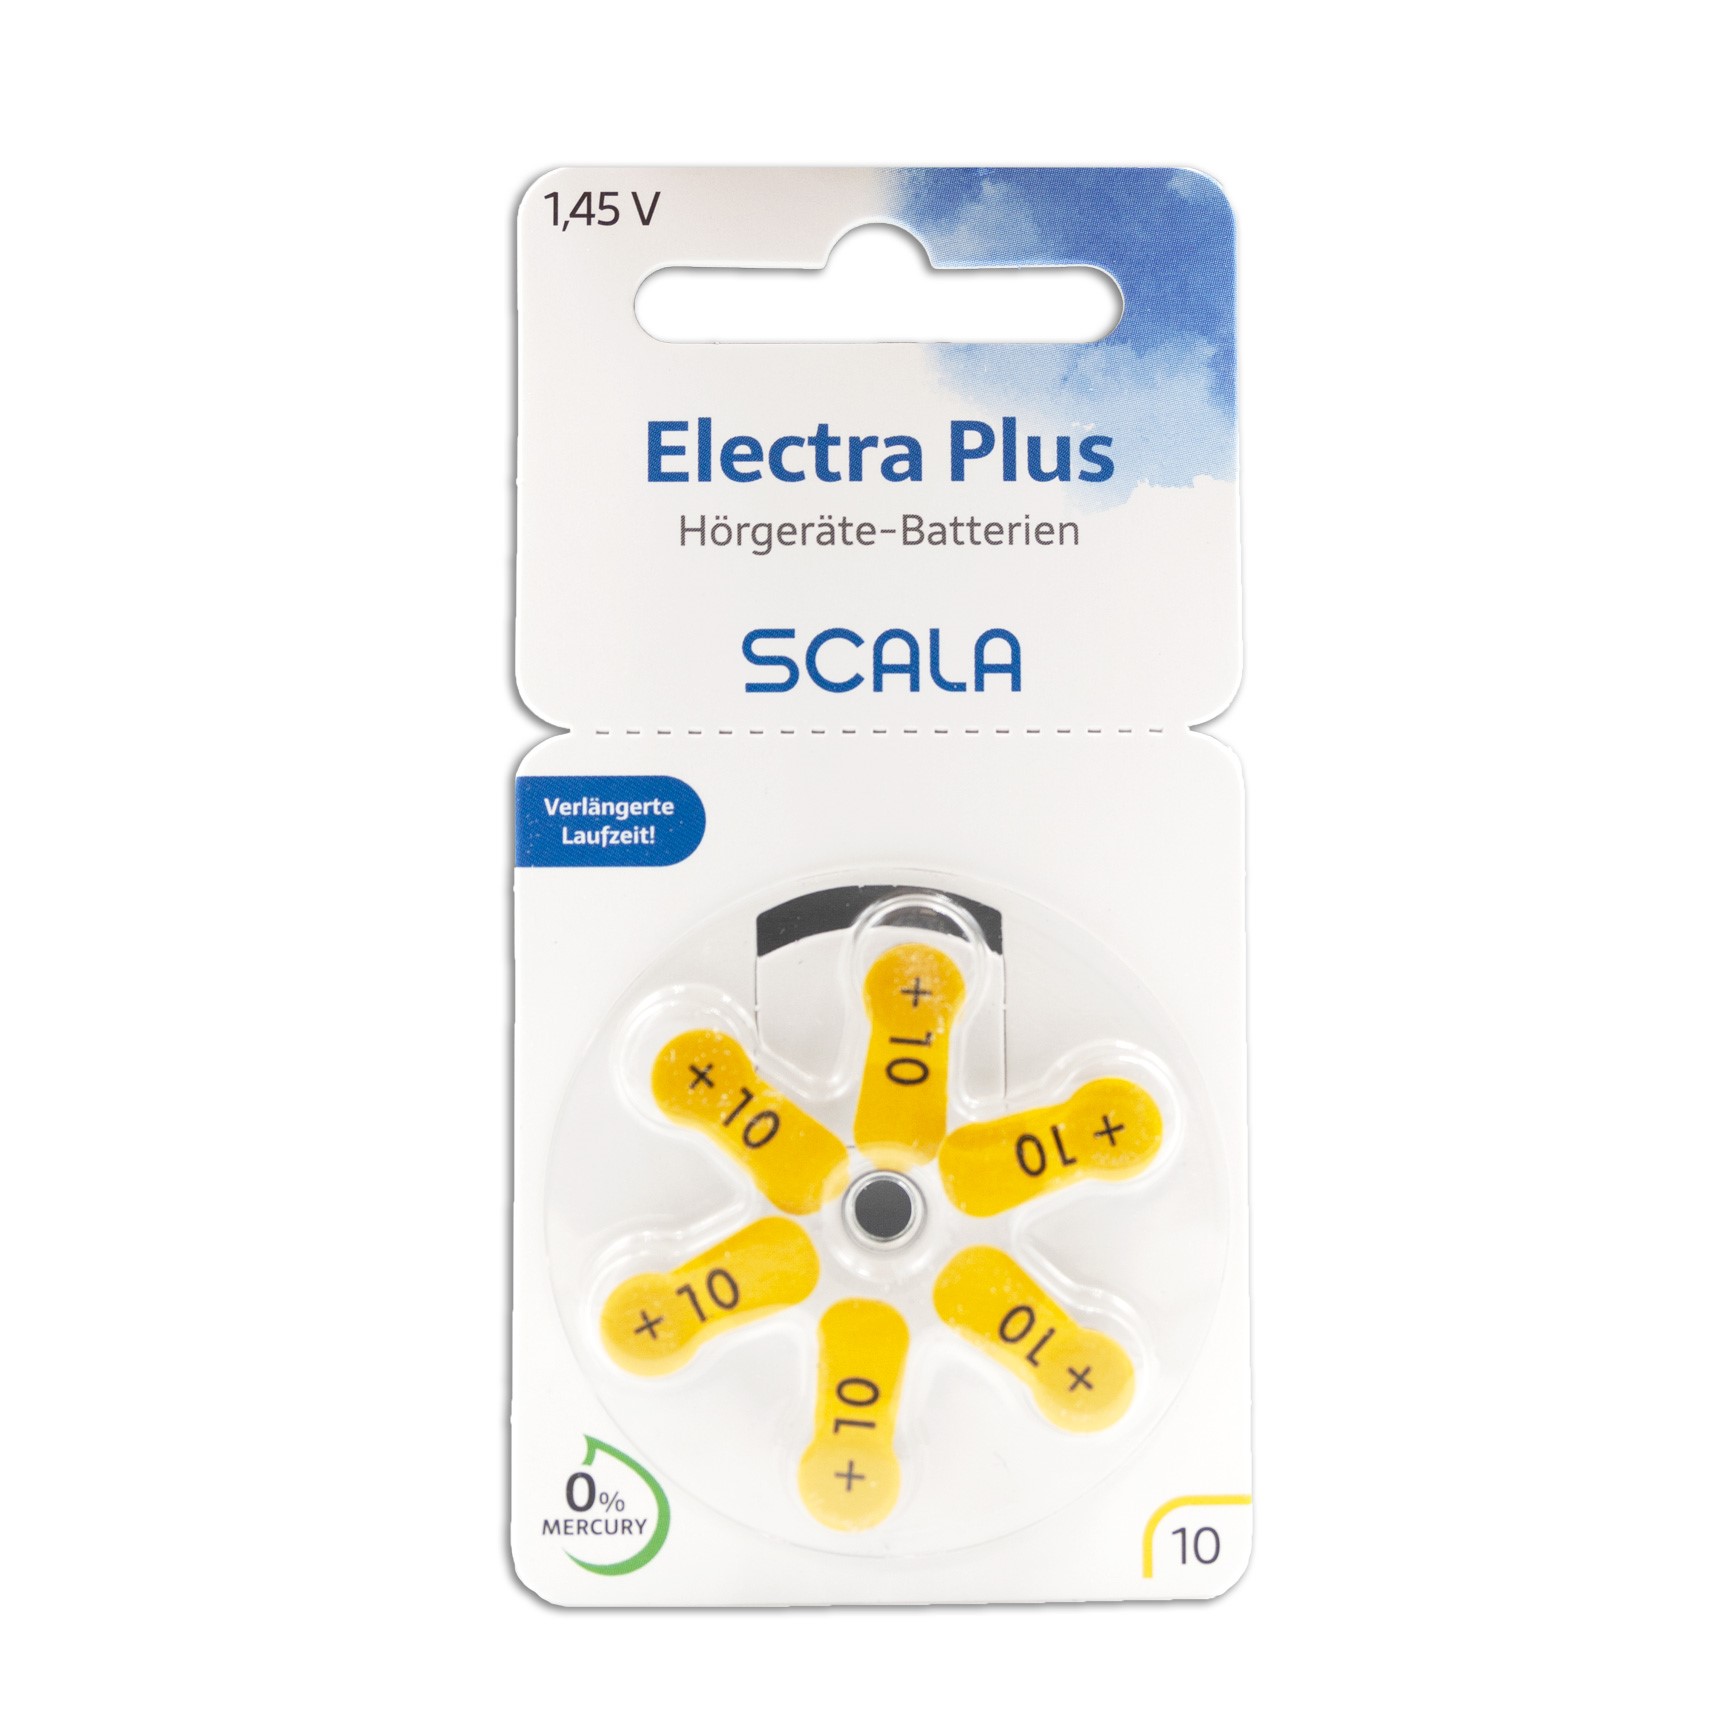 Scala 10er Pack Högerätebatterien - Electra Plus 10 mercury free